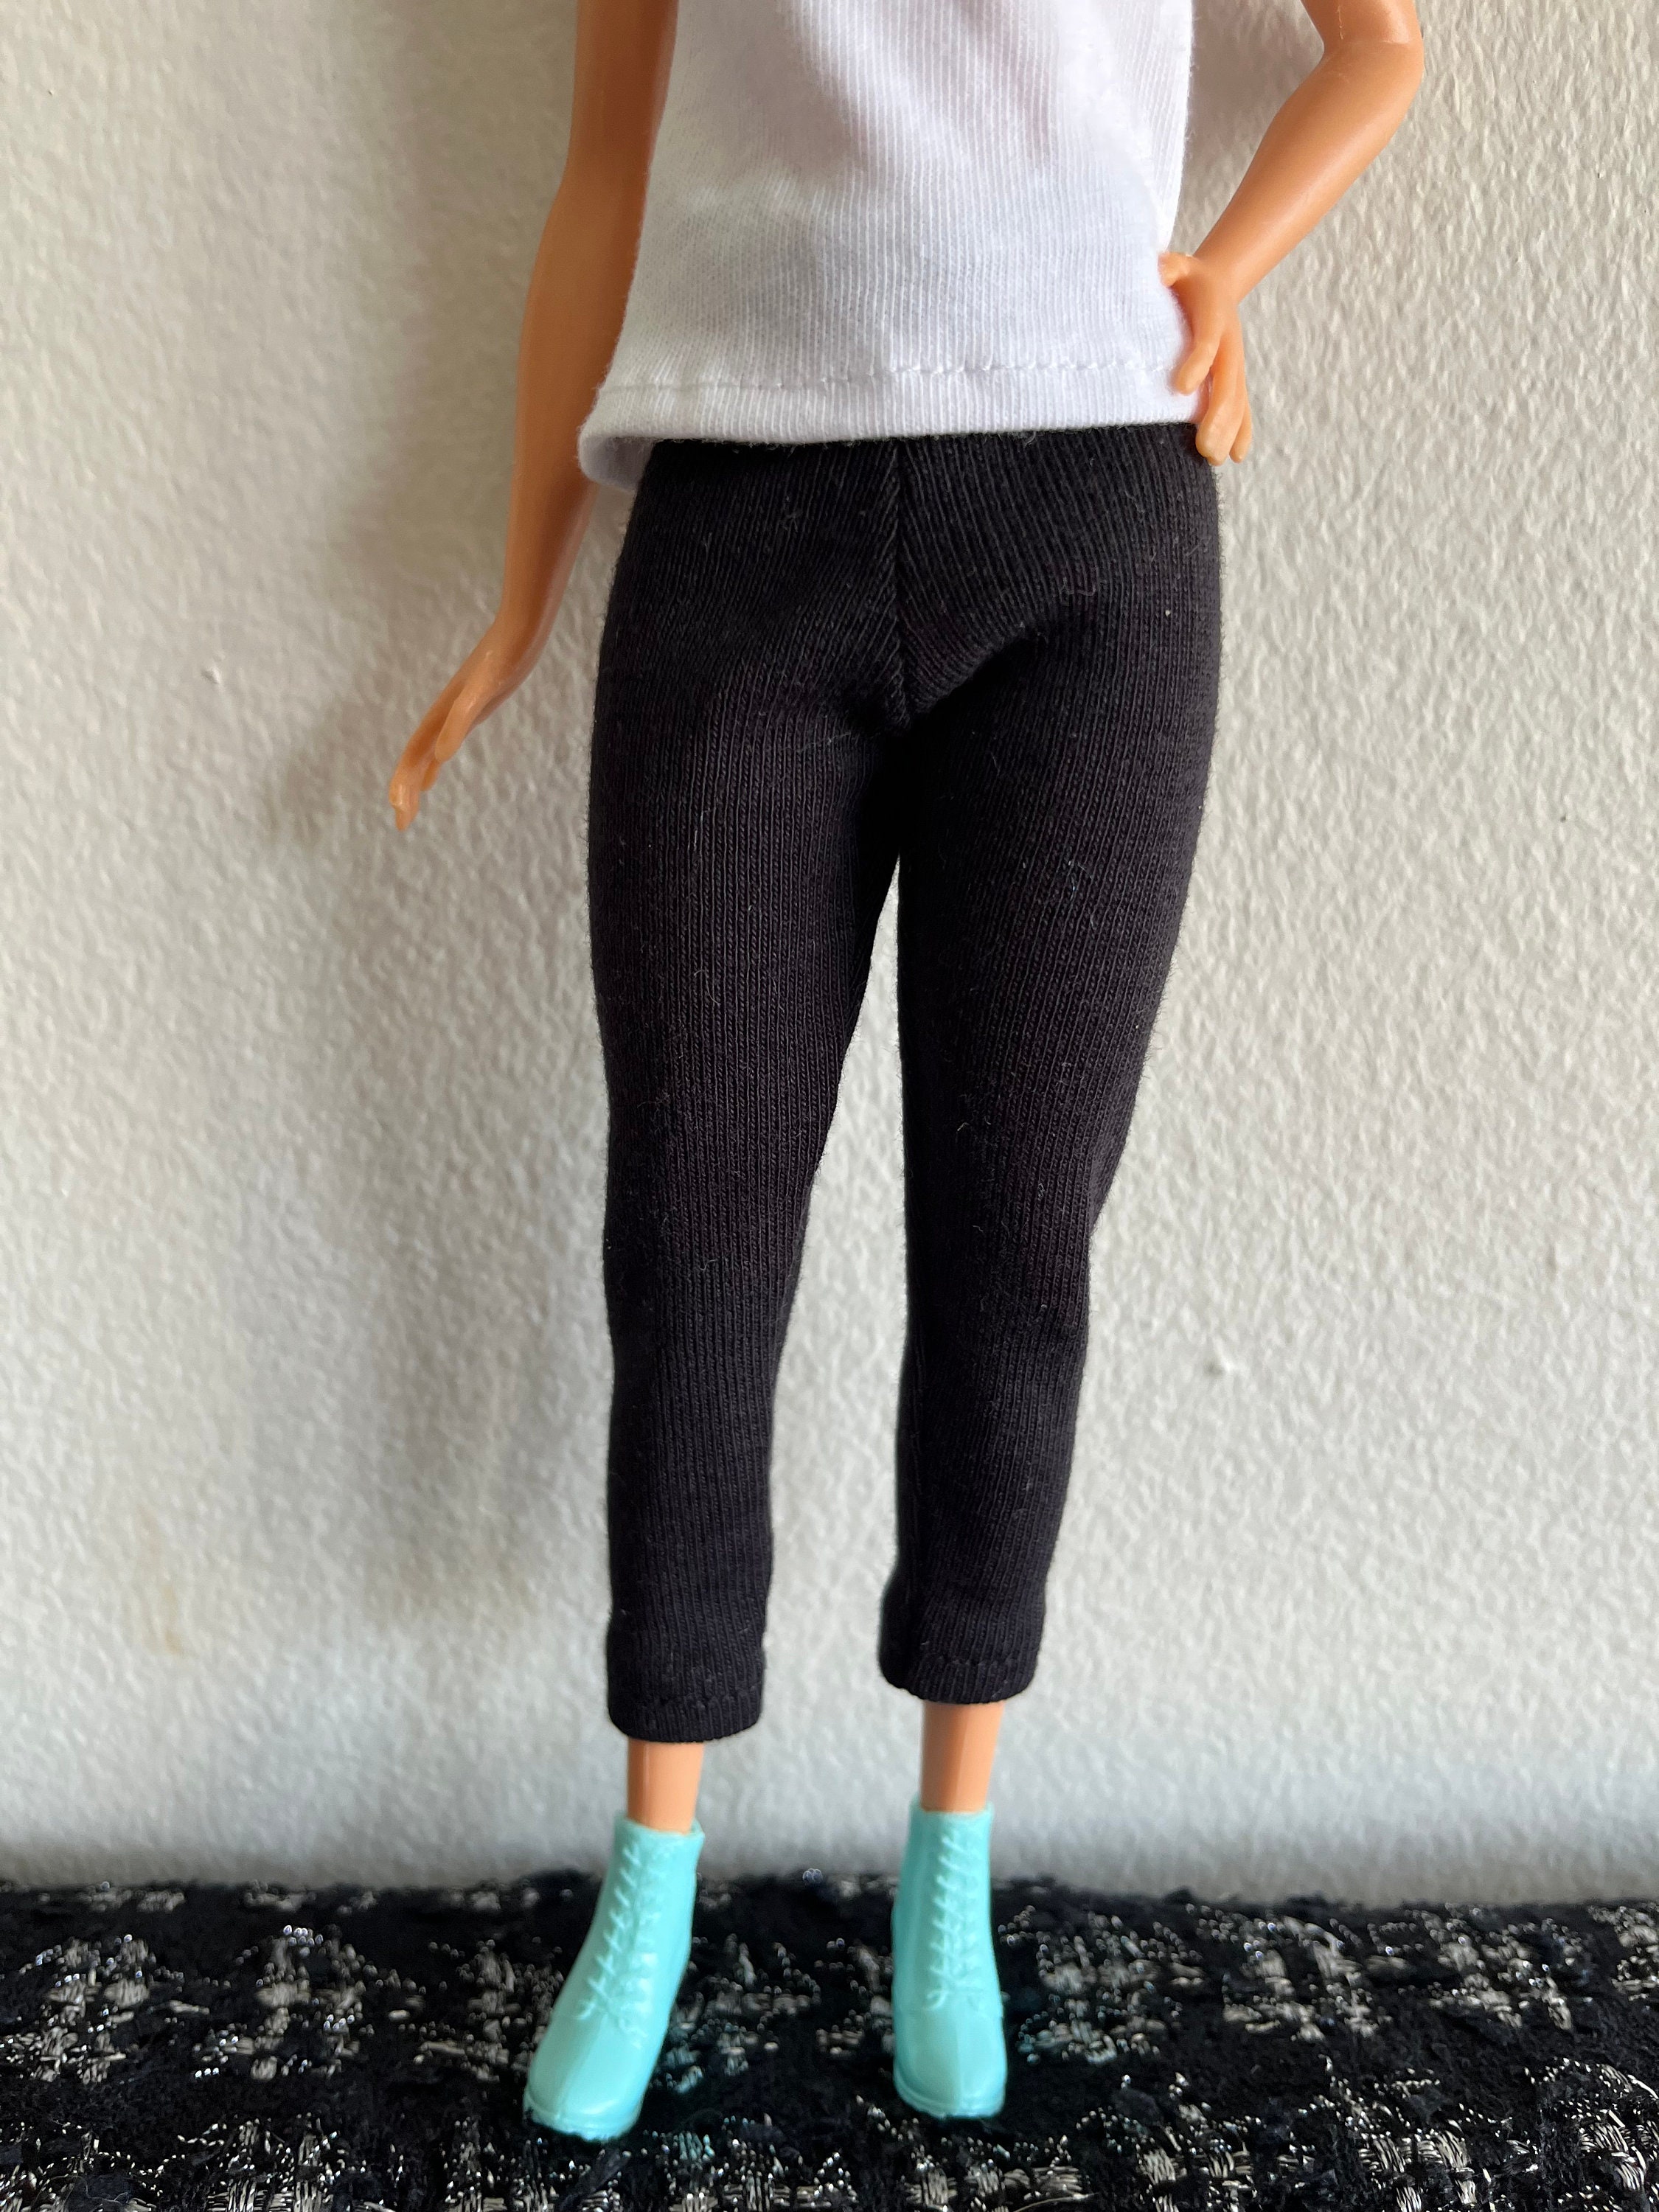 Barbie Leggings sold by Davita Bludgeon, SKU 538833